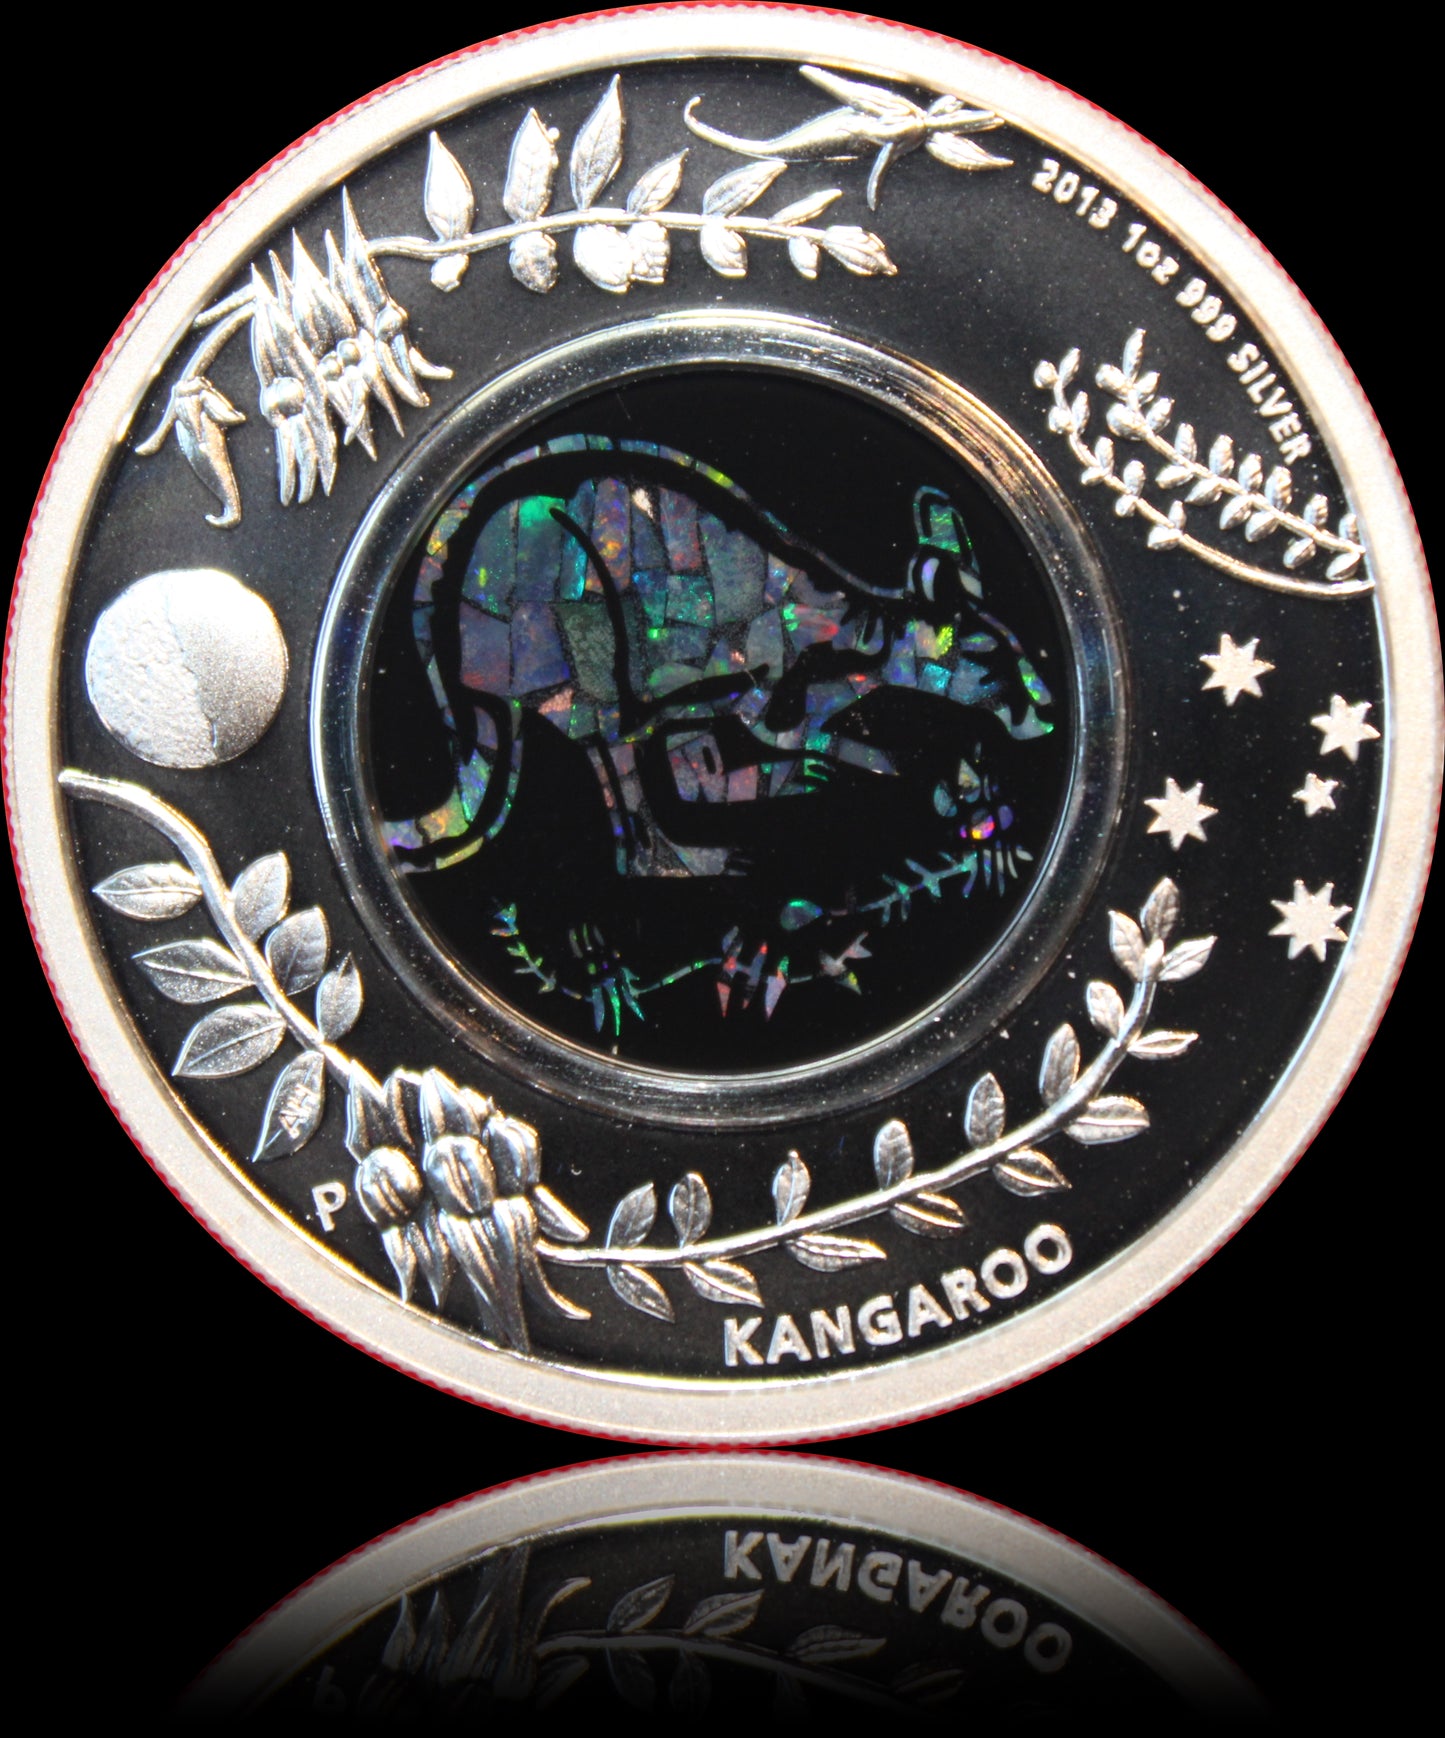 KANGAROO - KANGAROO, Australian Opal Series 1 oz Silver Proof $1, 2014